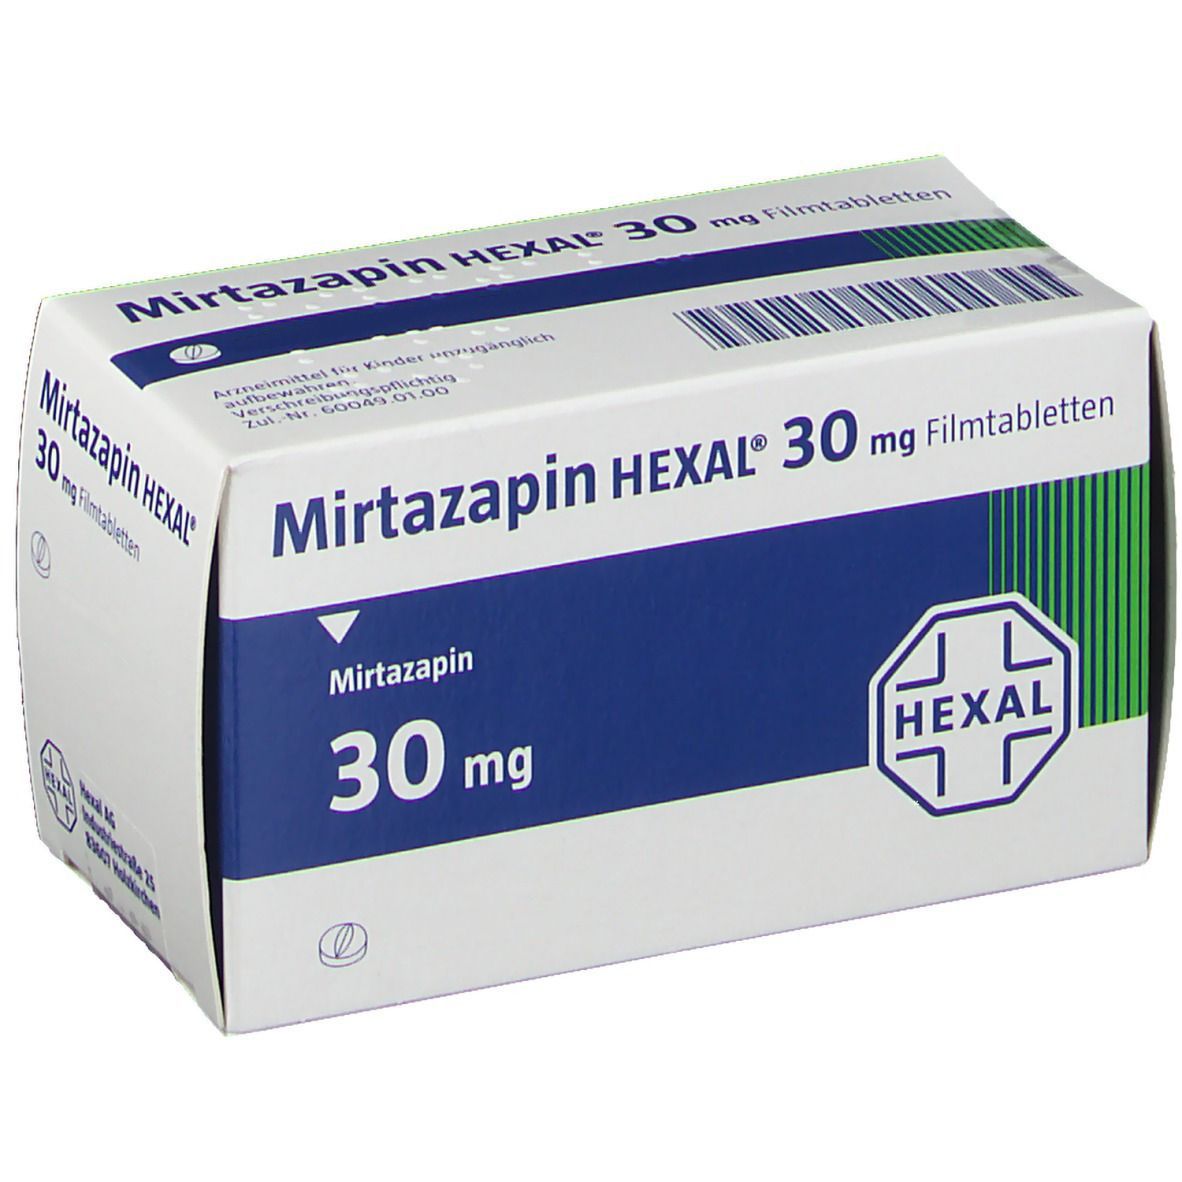 Mirtazapin HEXAL® 30 mg